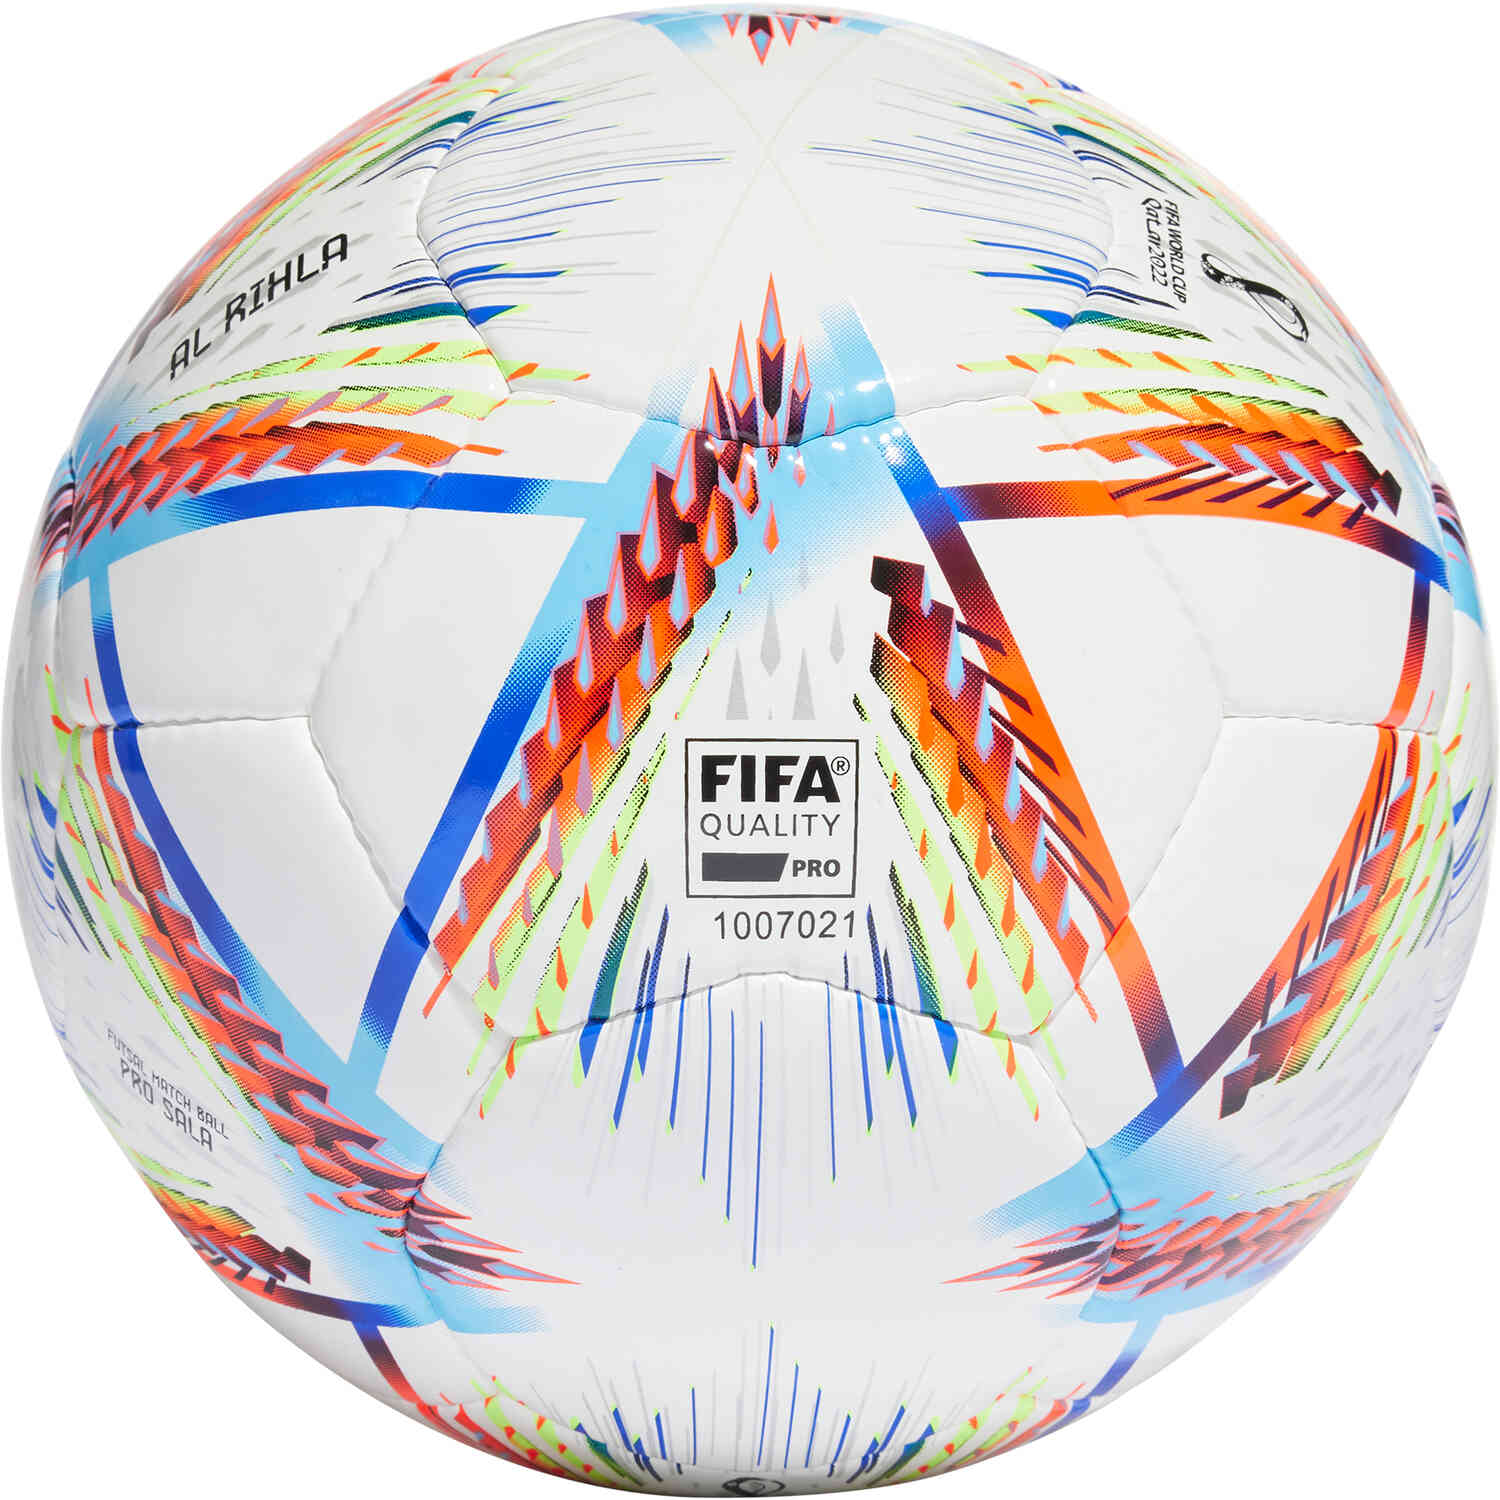 Adidas FIFA World Cup 2022 Al Rihla Pro Soccer Ball - White-Pantone